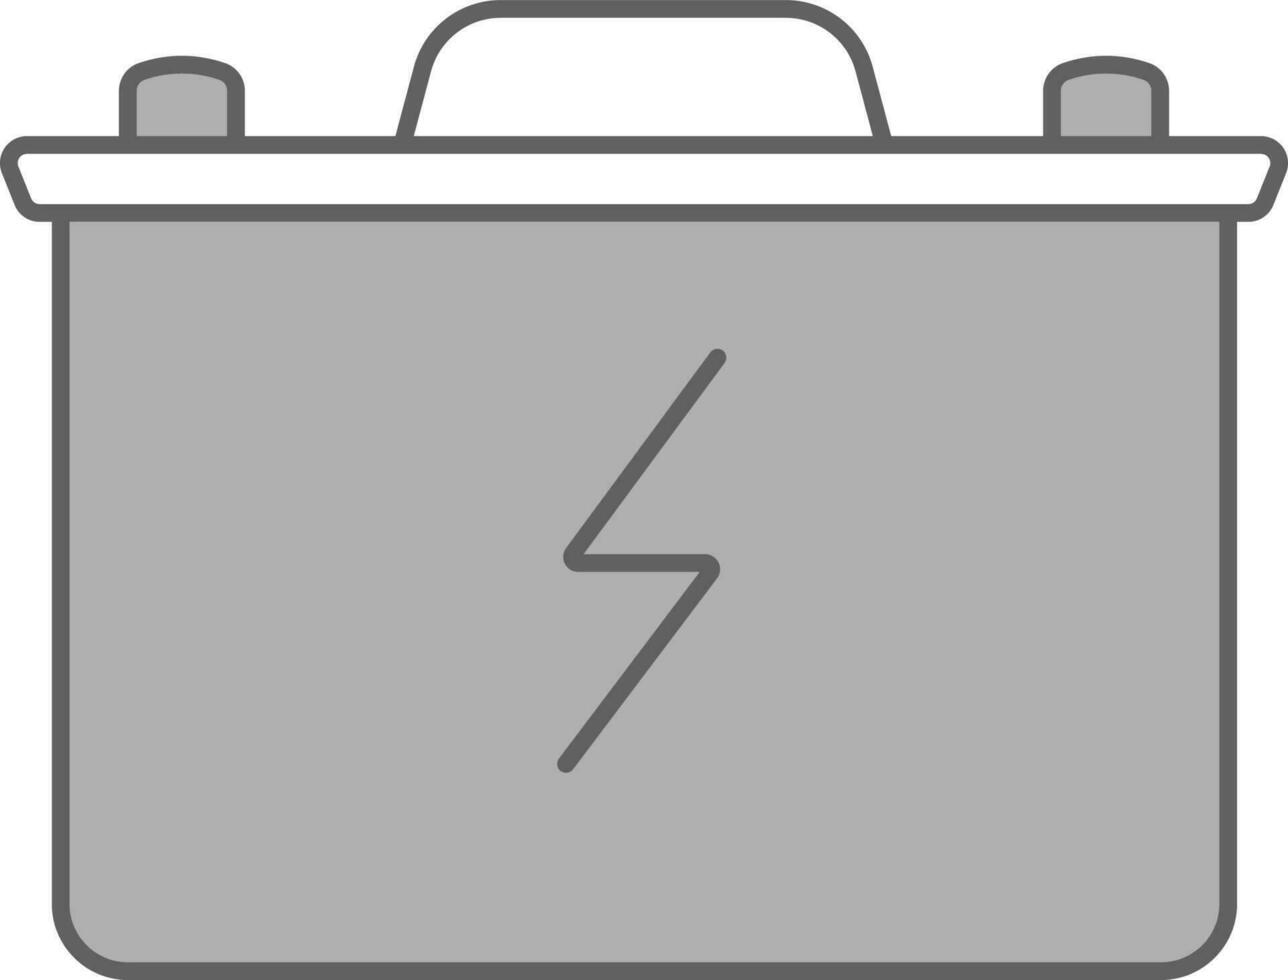 röhrenförmig Batterie Symbol im Weiß und grau Farbe. vektor